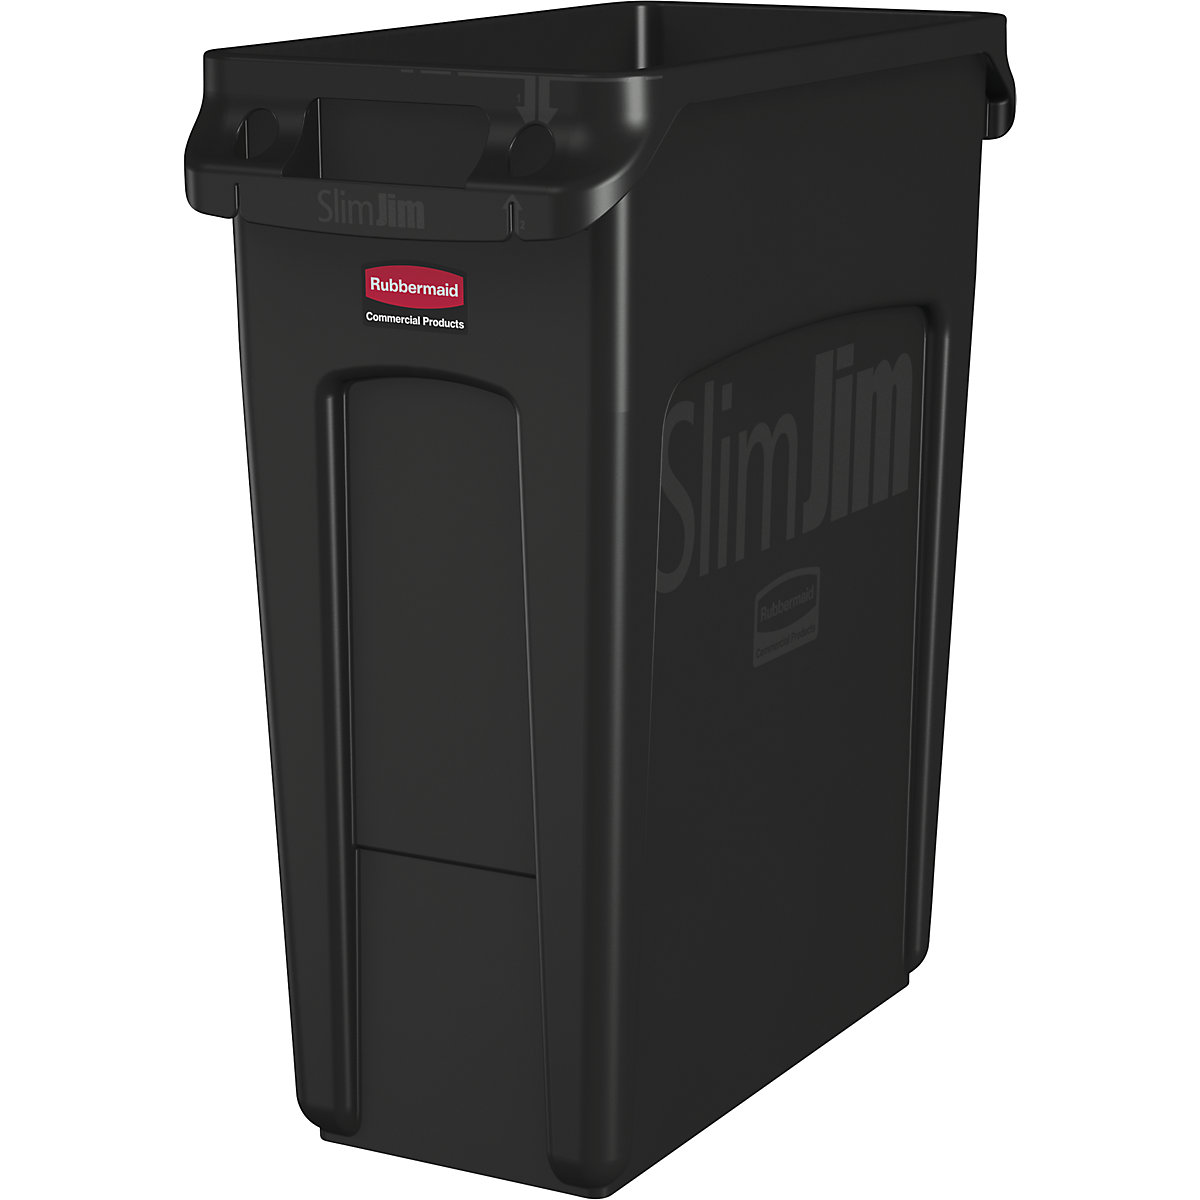 Zberač druhotných surovín/nádoba na odpad SLIM JIM® – Rubbermaid, objem 60 l, s vetracími kanálmi, čierna, od 3 ks-9